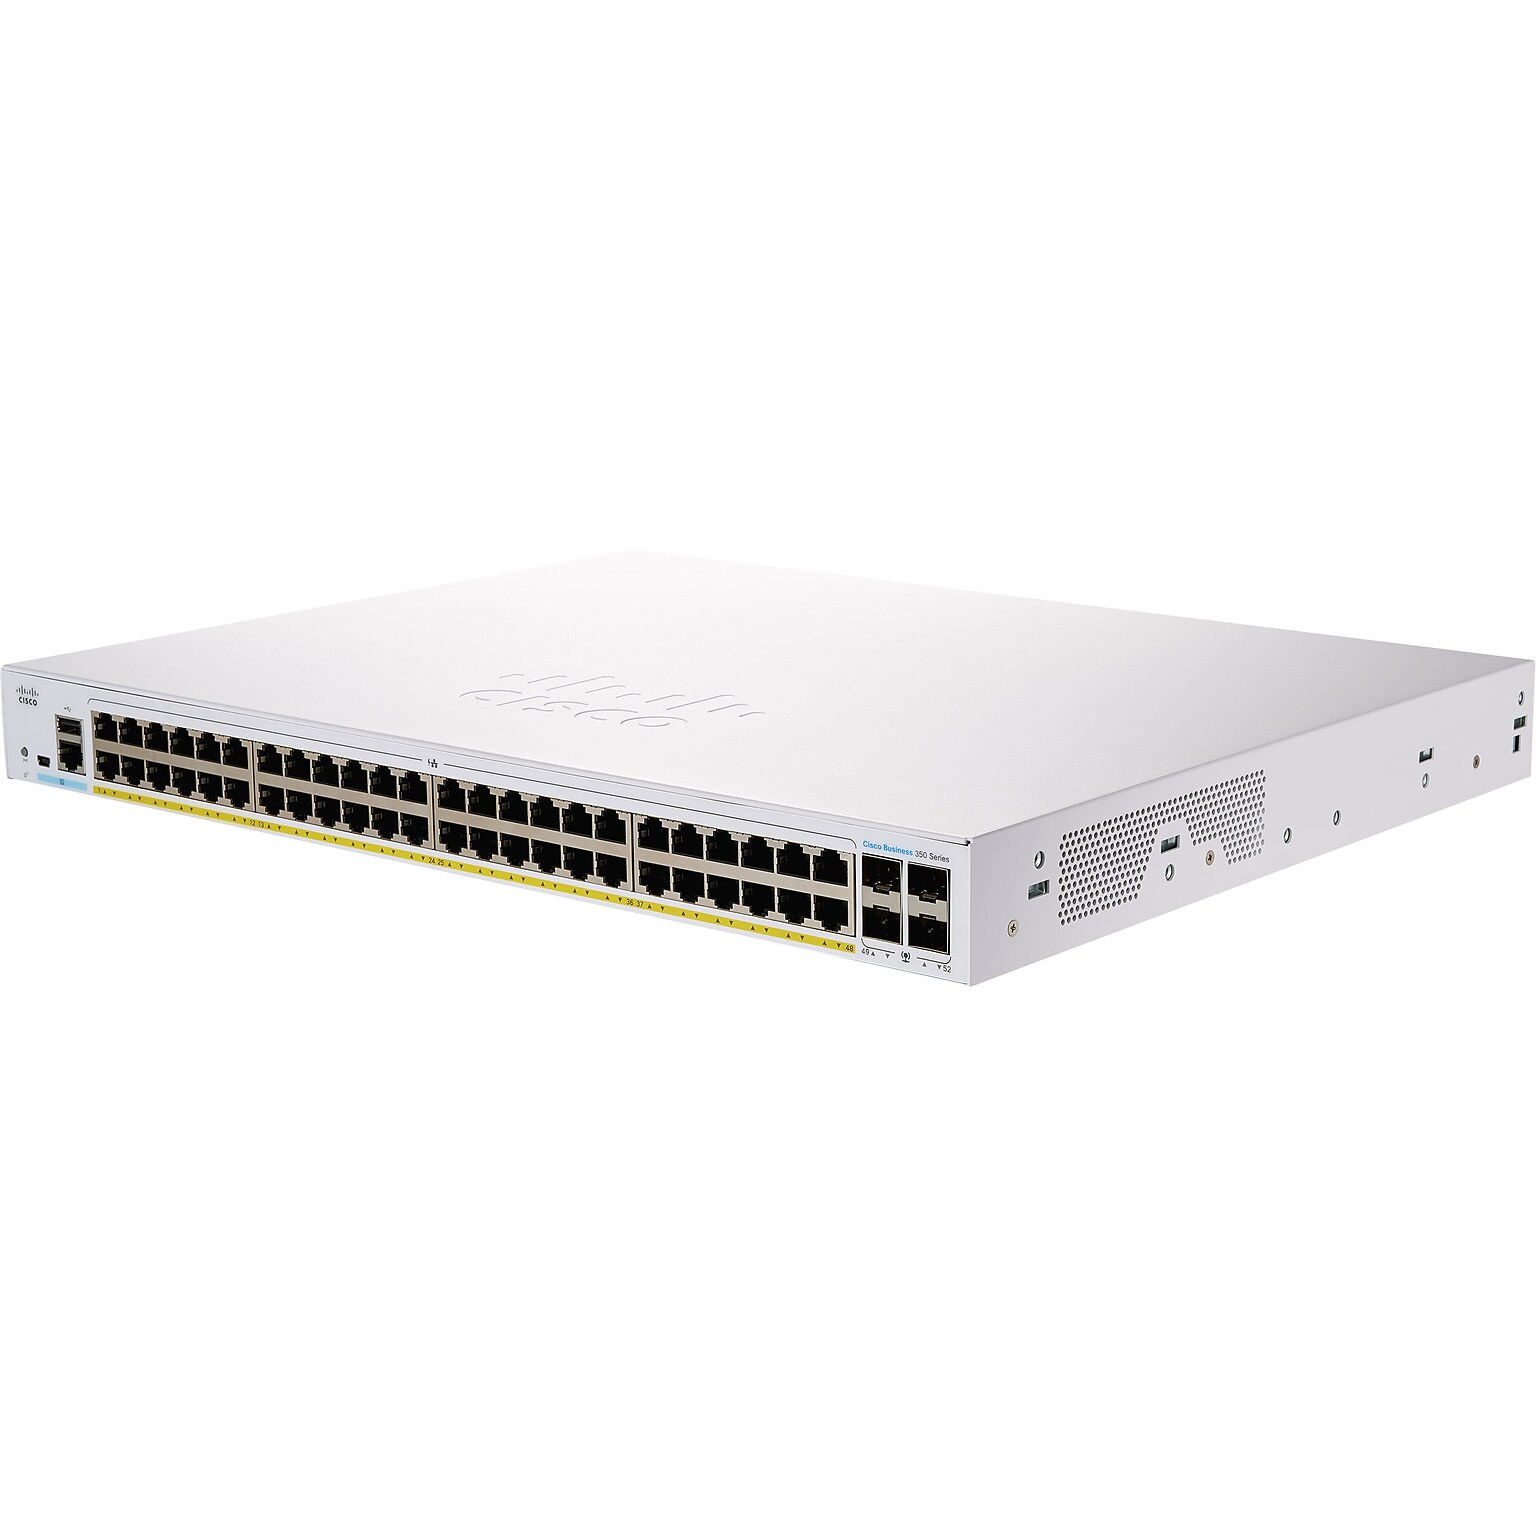 Cisco Business 350 Series 52-Port Gigabit Ethernet Managed Switch, Silver (CBS350-48P-4G-NA)